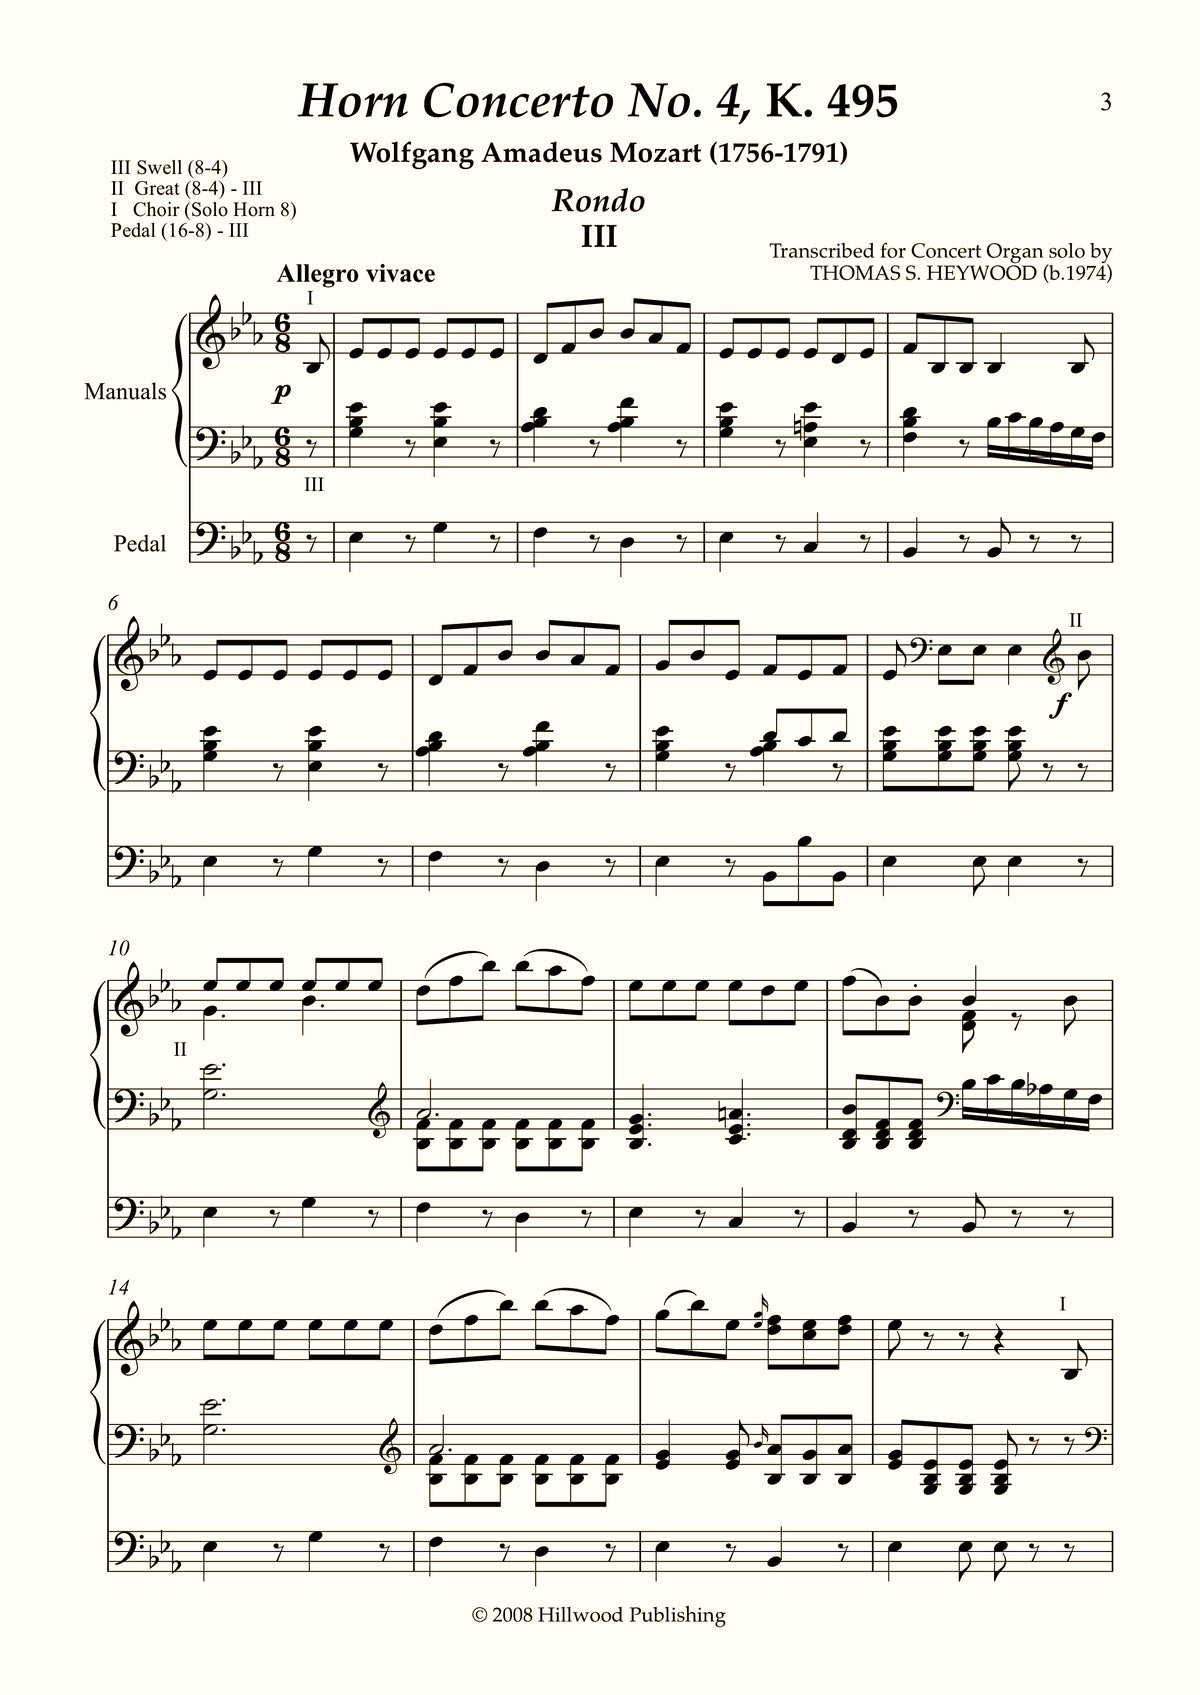 Mozart/Heywood - Rondo from Horn Concerto No. 4, K. 495 (Score) | Thomas Heywood | Concert Organ International